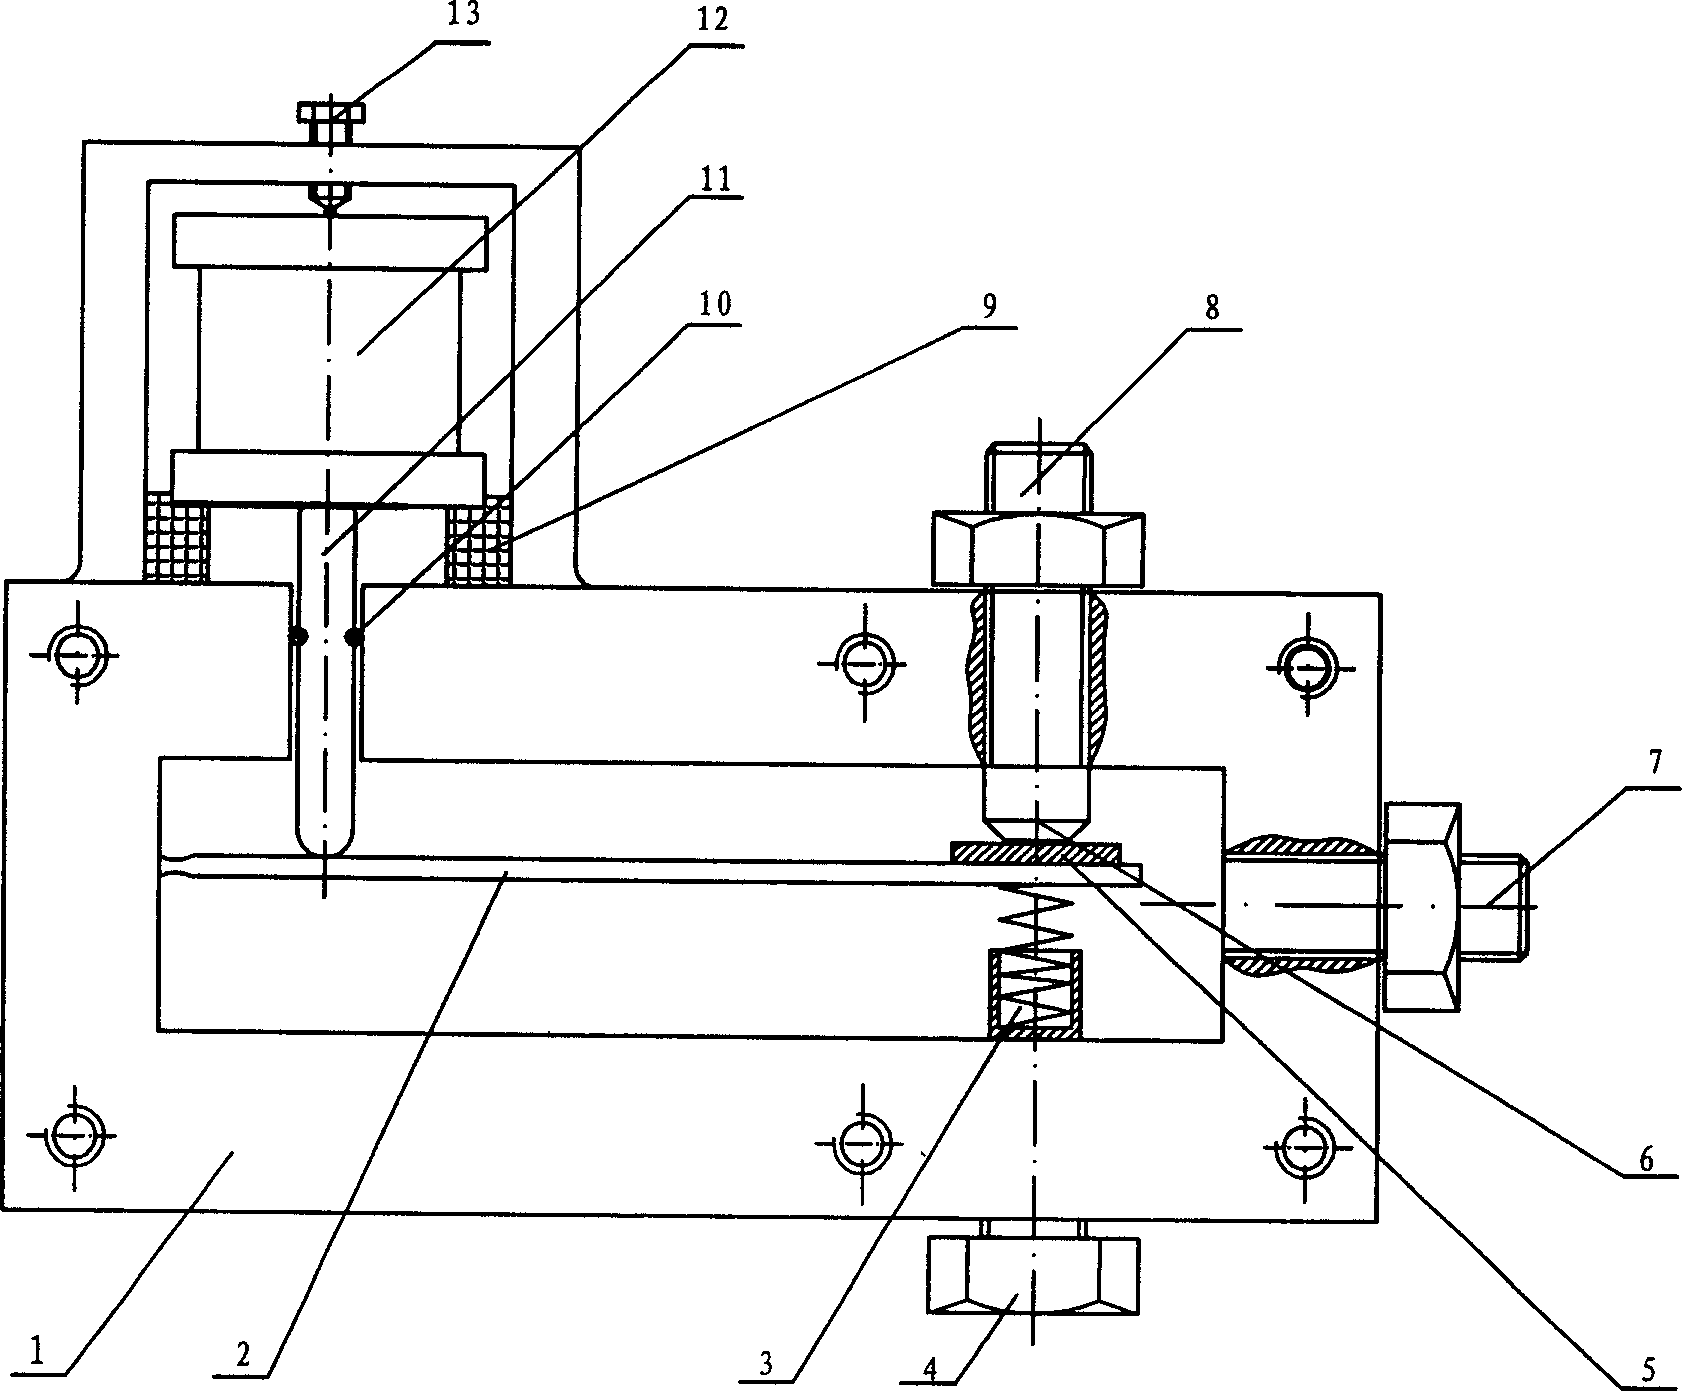 Piezoelectric valve based on piezoelectric stack driver